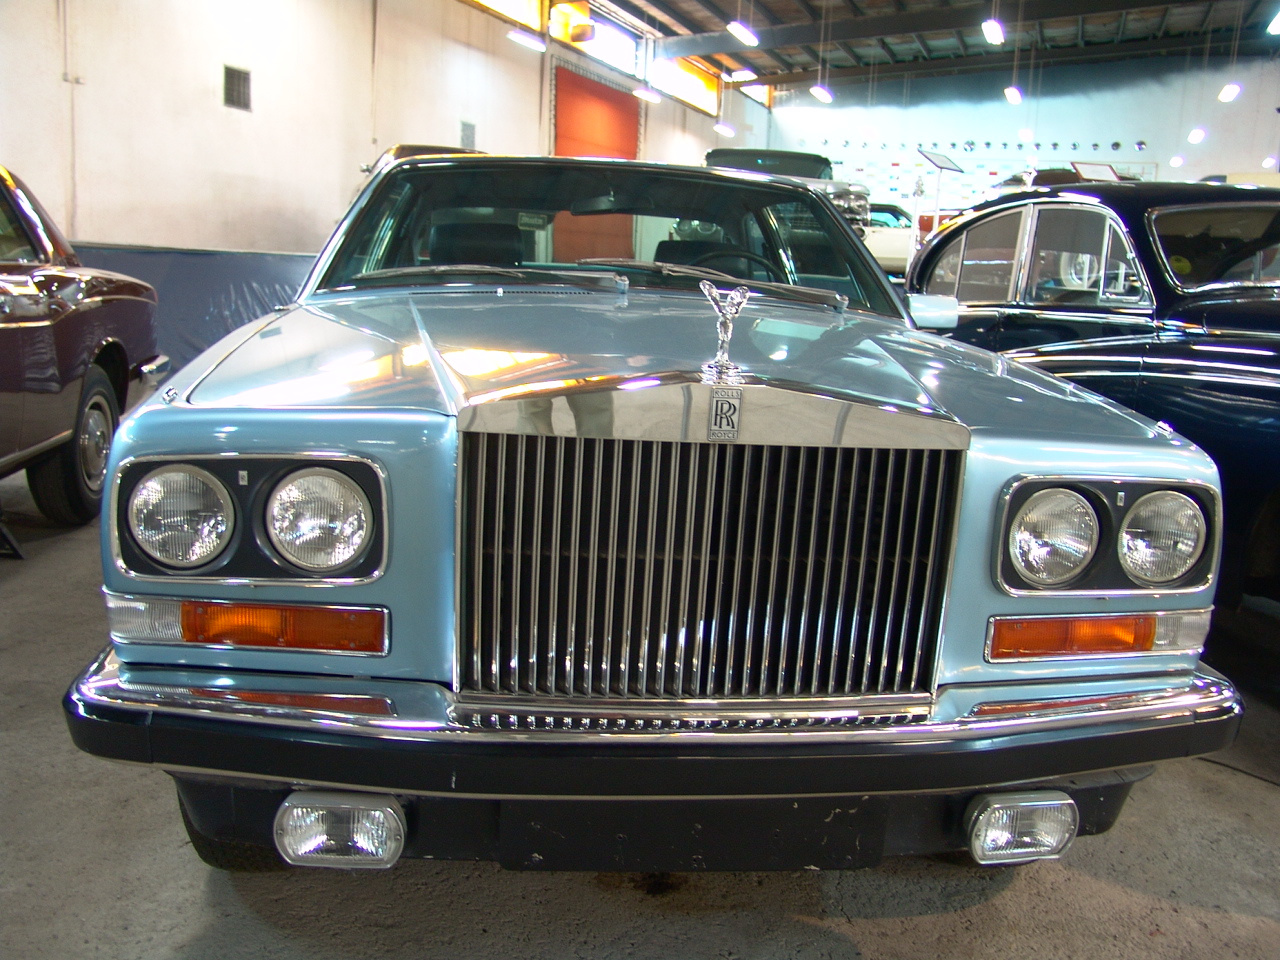 Iranian car museum, Karaj,July13,2010 169